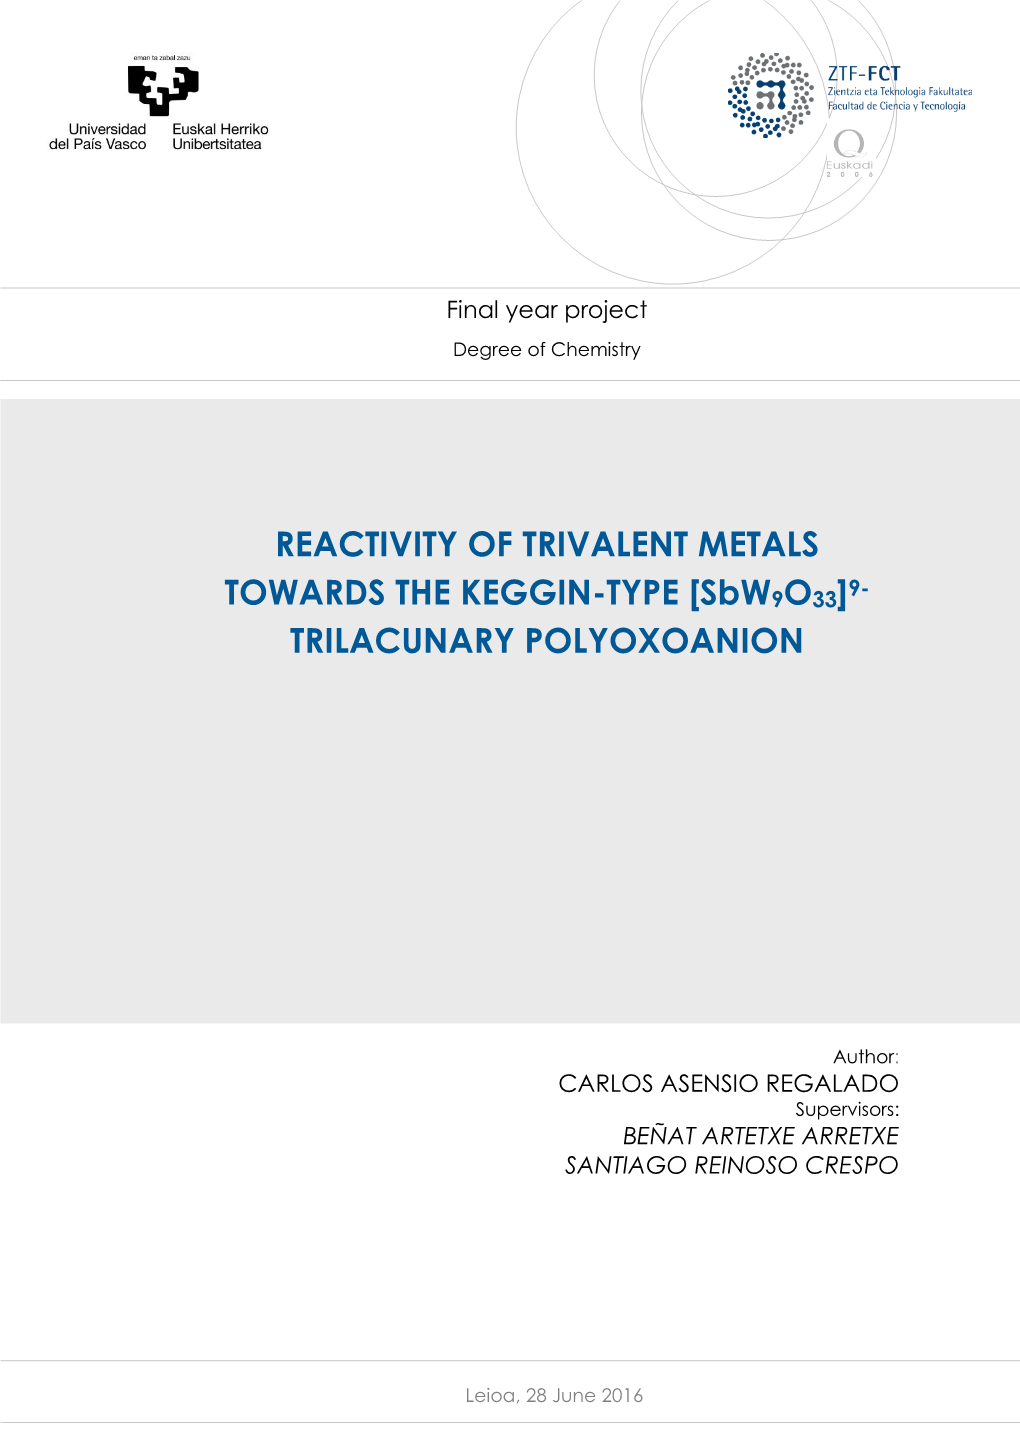 Reactivity of Trivalent Metals Towards the Keggin-Type